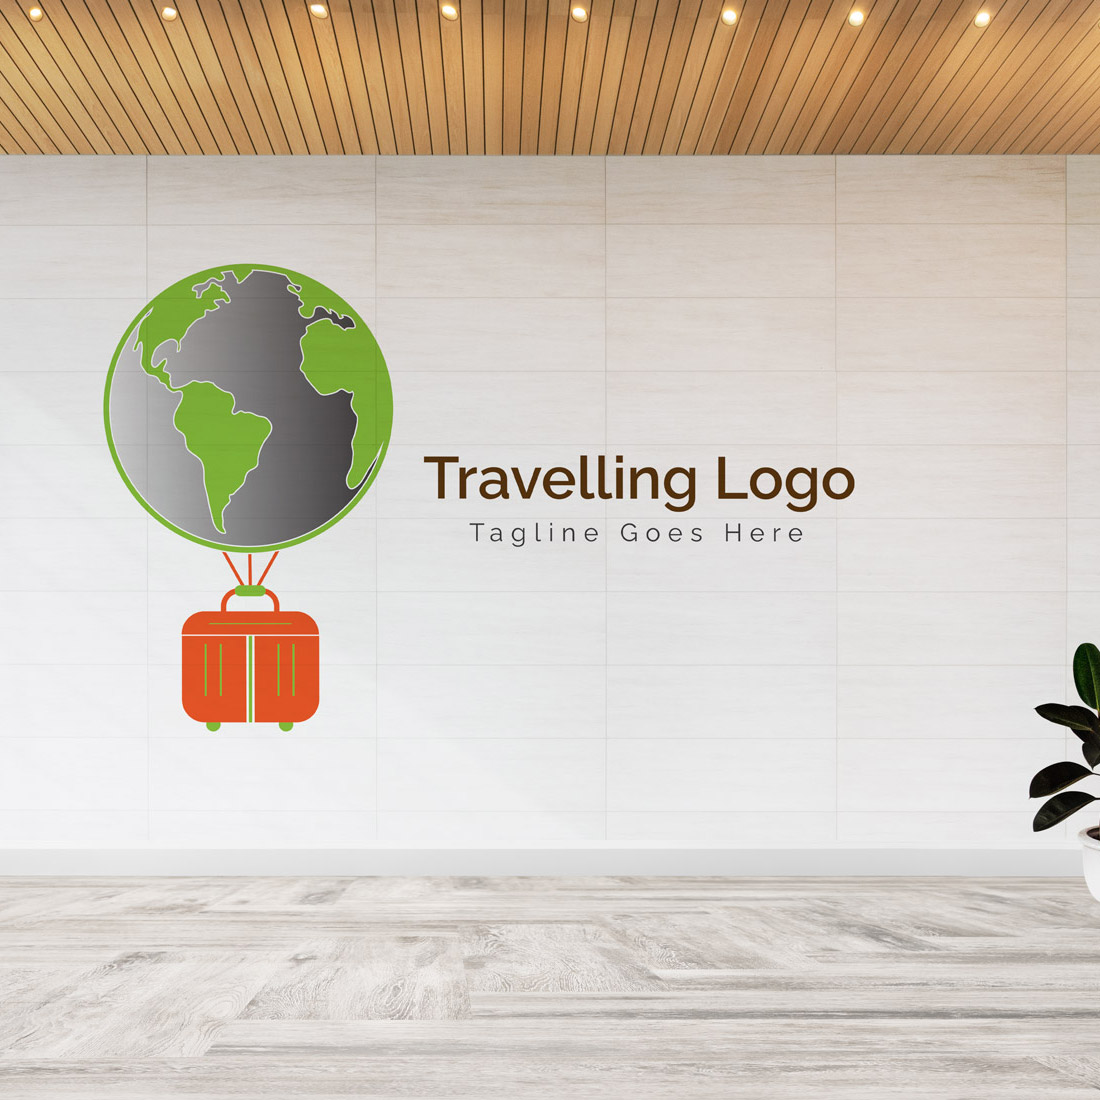 Travell Logo Design cover image.